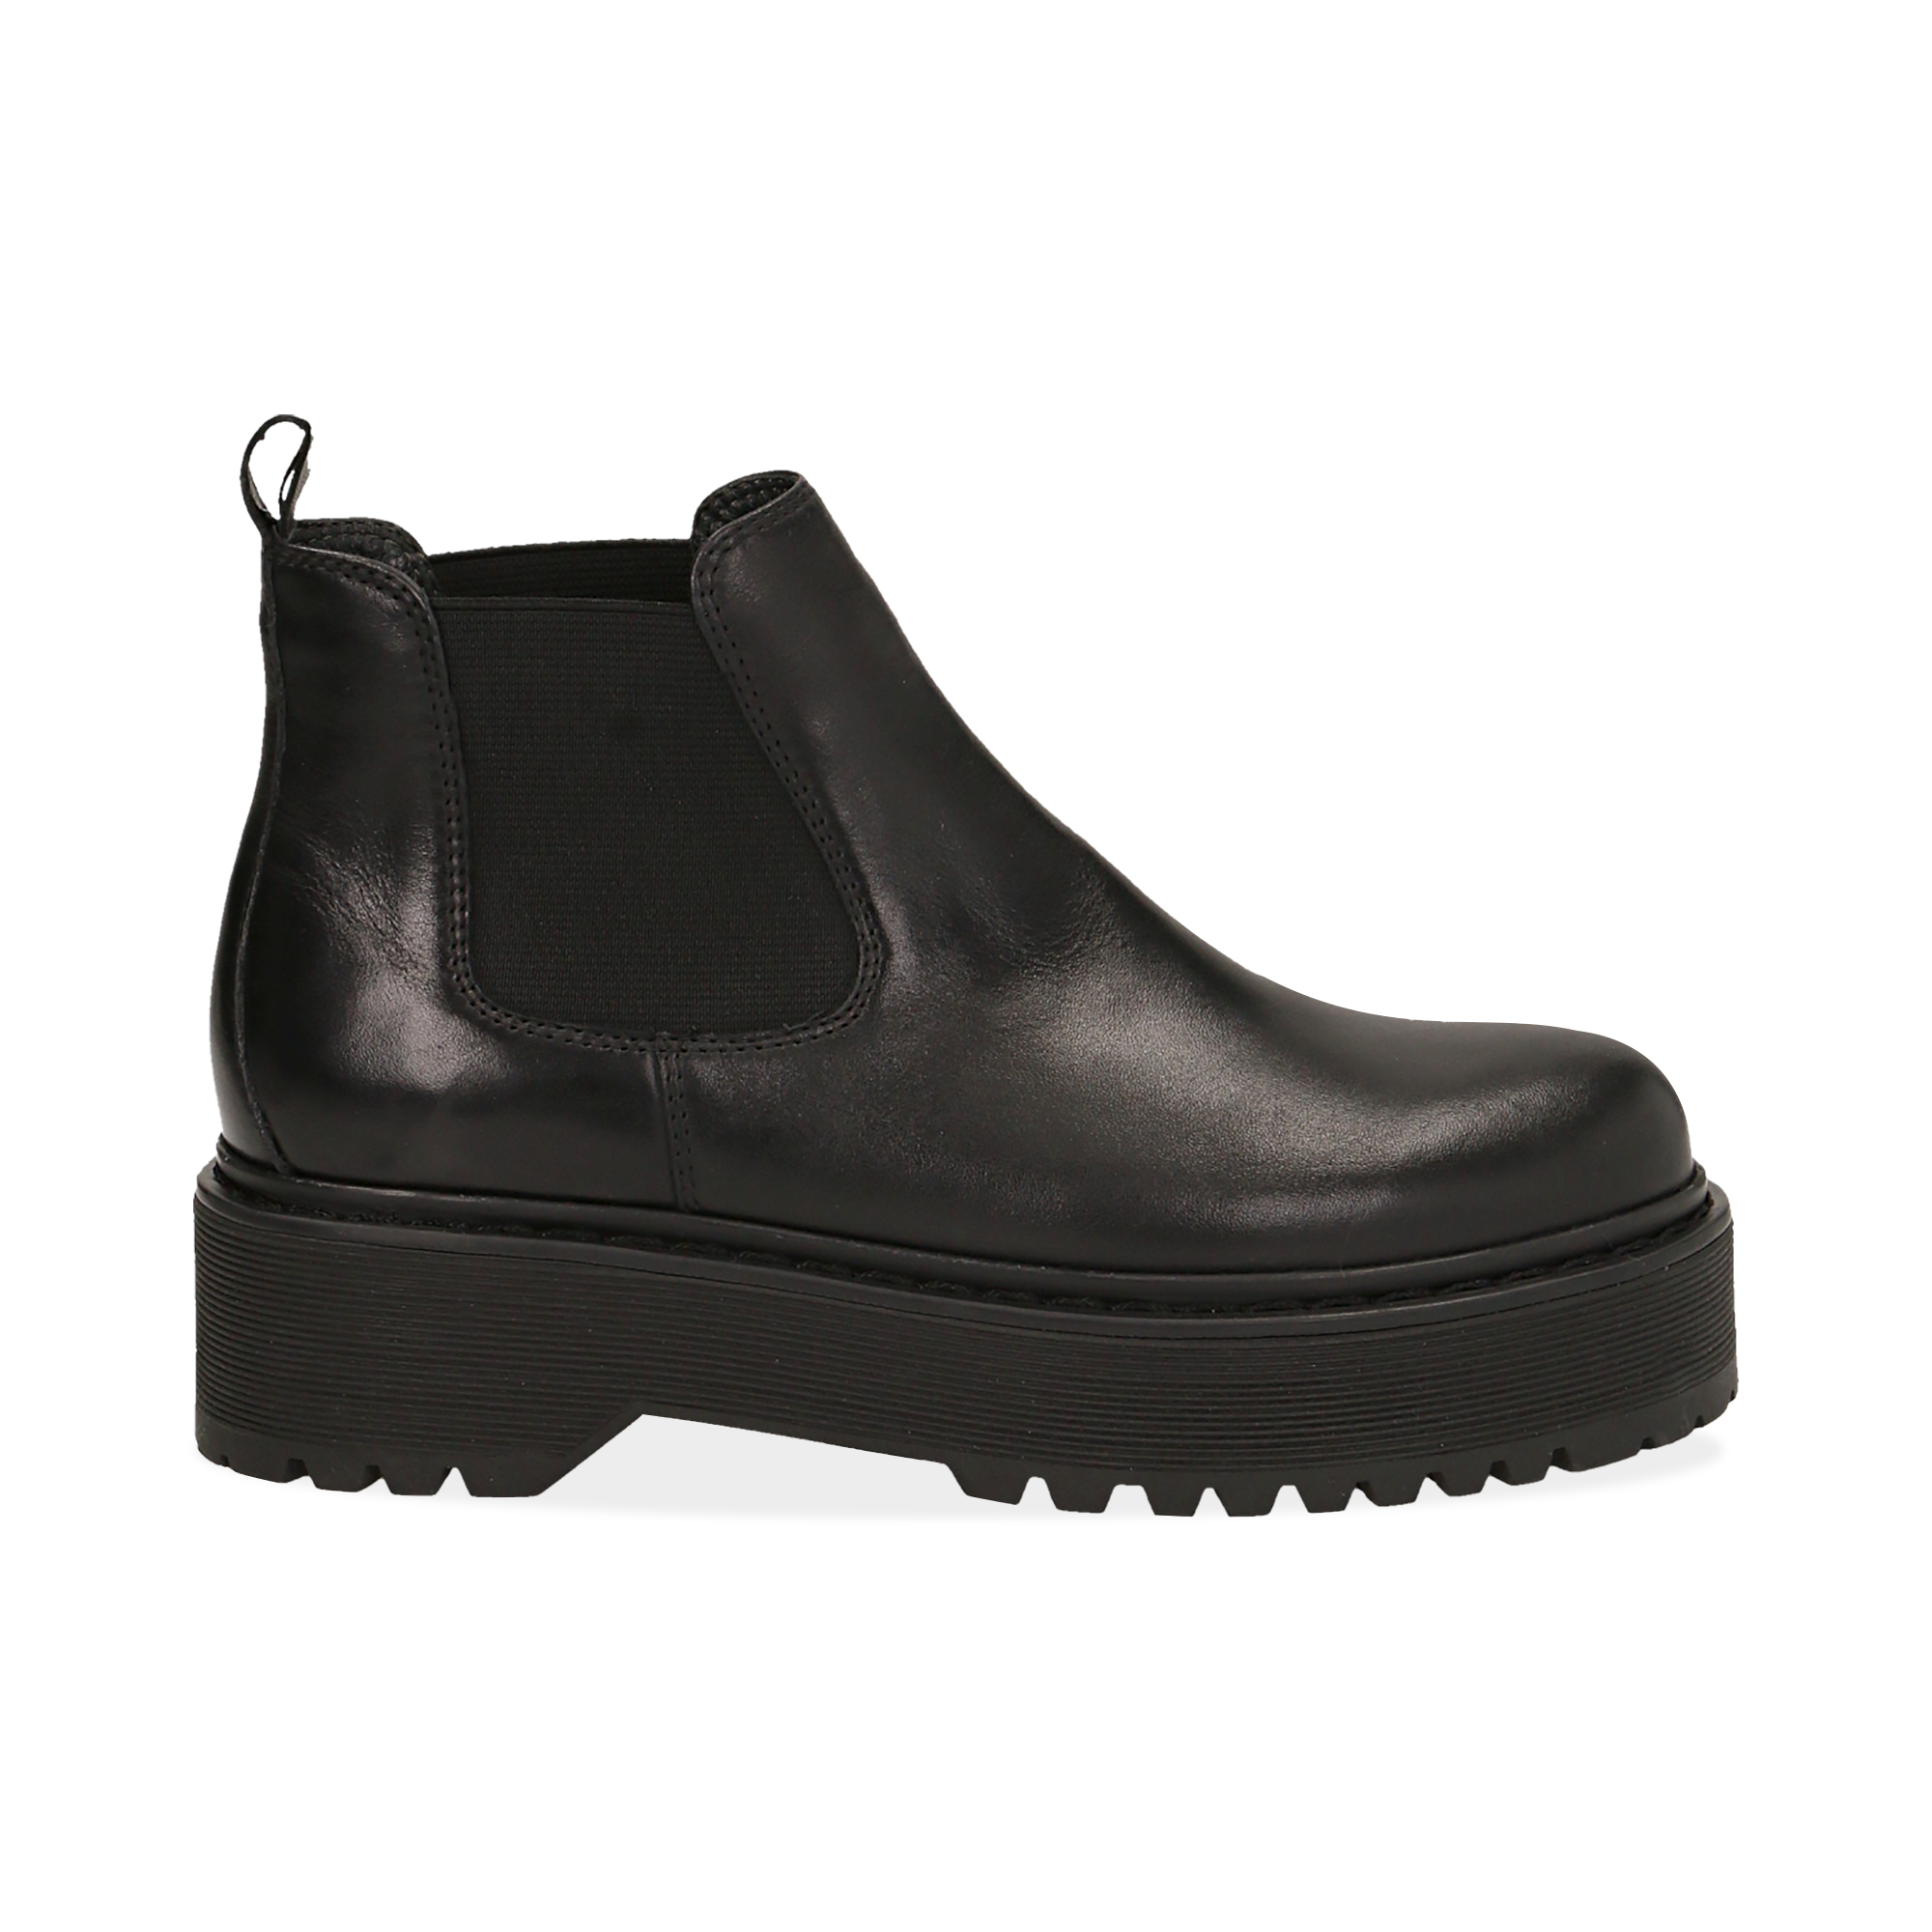 Chelsea boots neri in vera pelle, tacco 4,5 cm 